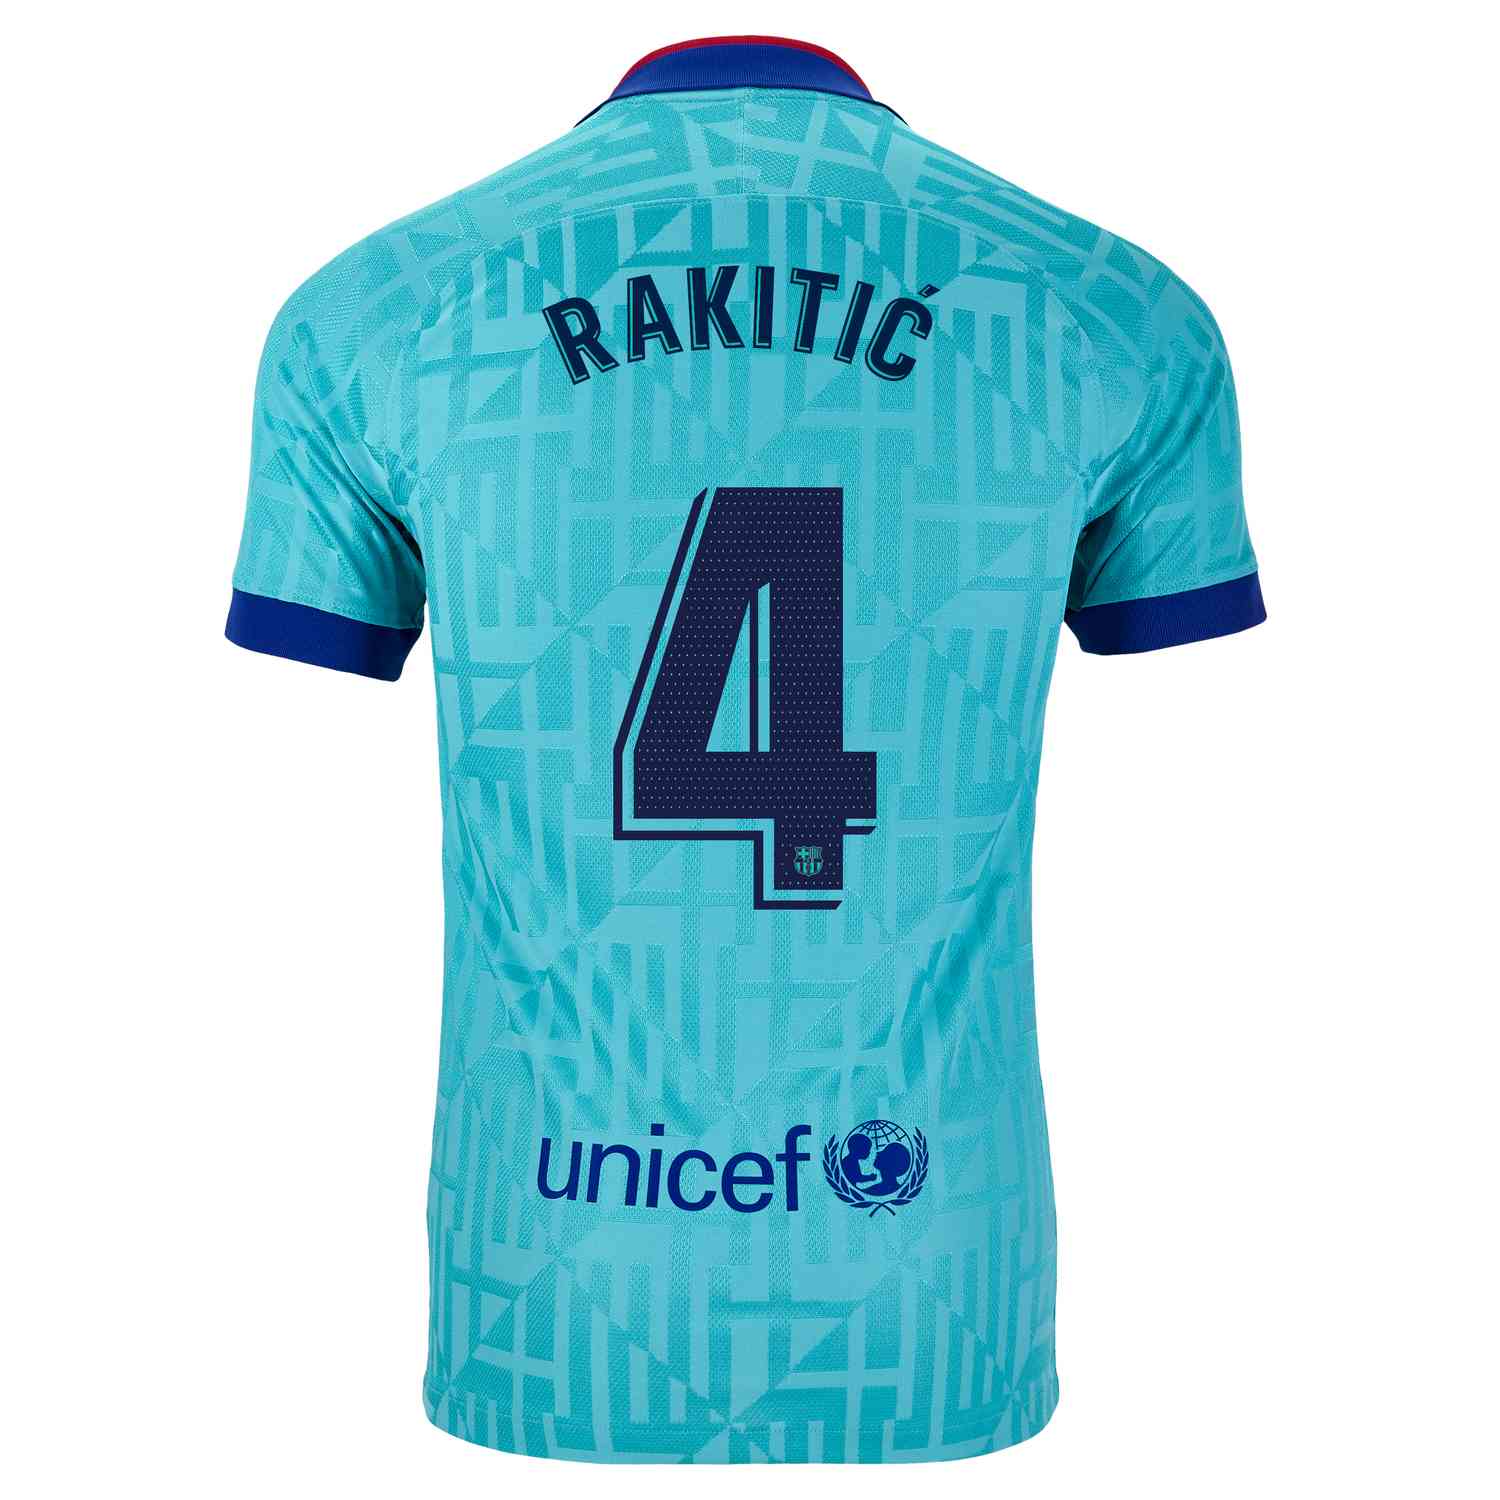 rakitic jersey number